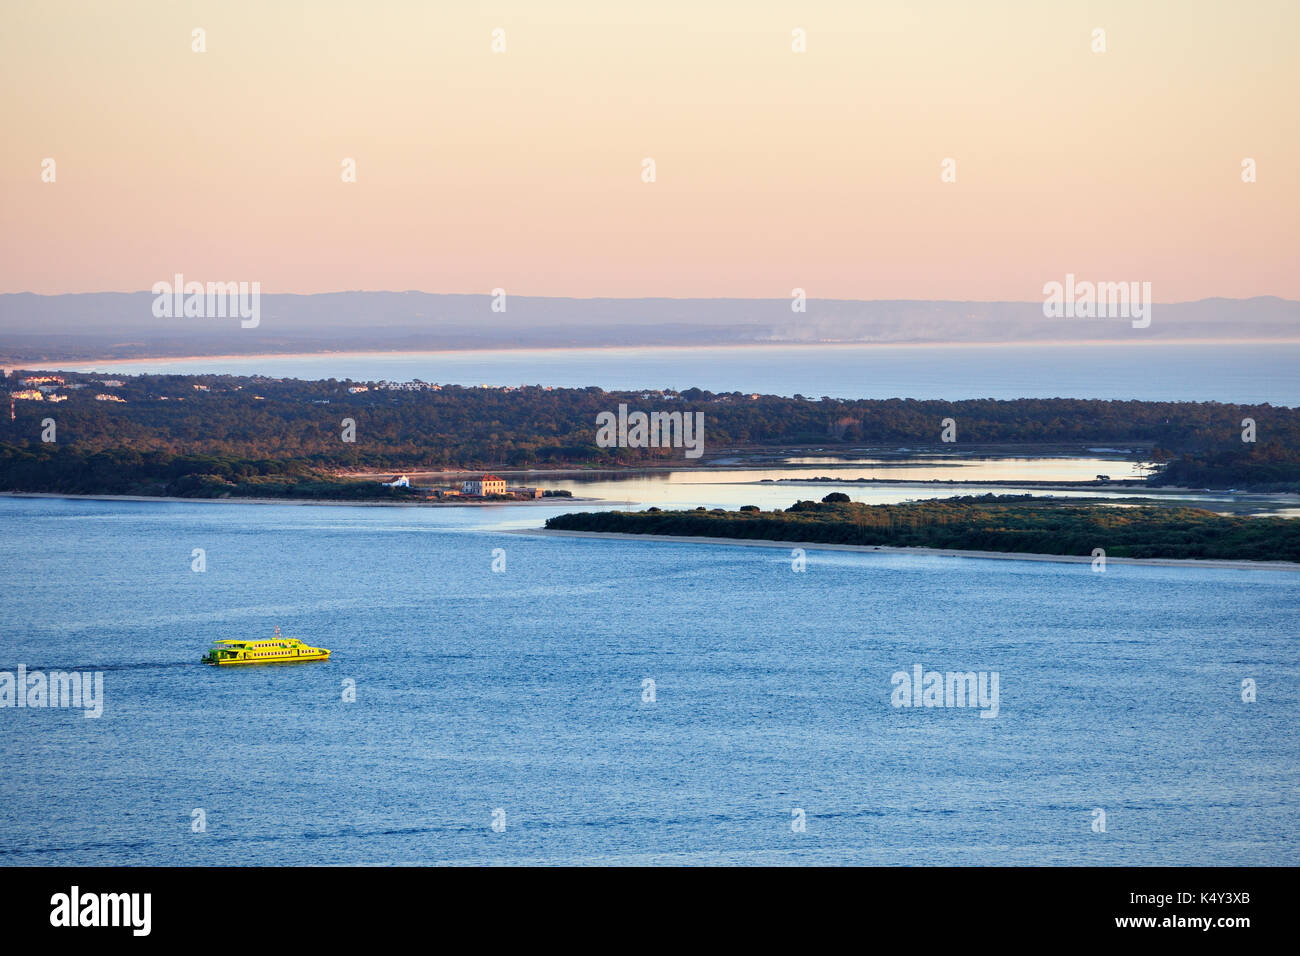 Sado river Bay and Troia peninsula. Portugal Stock Photo